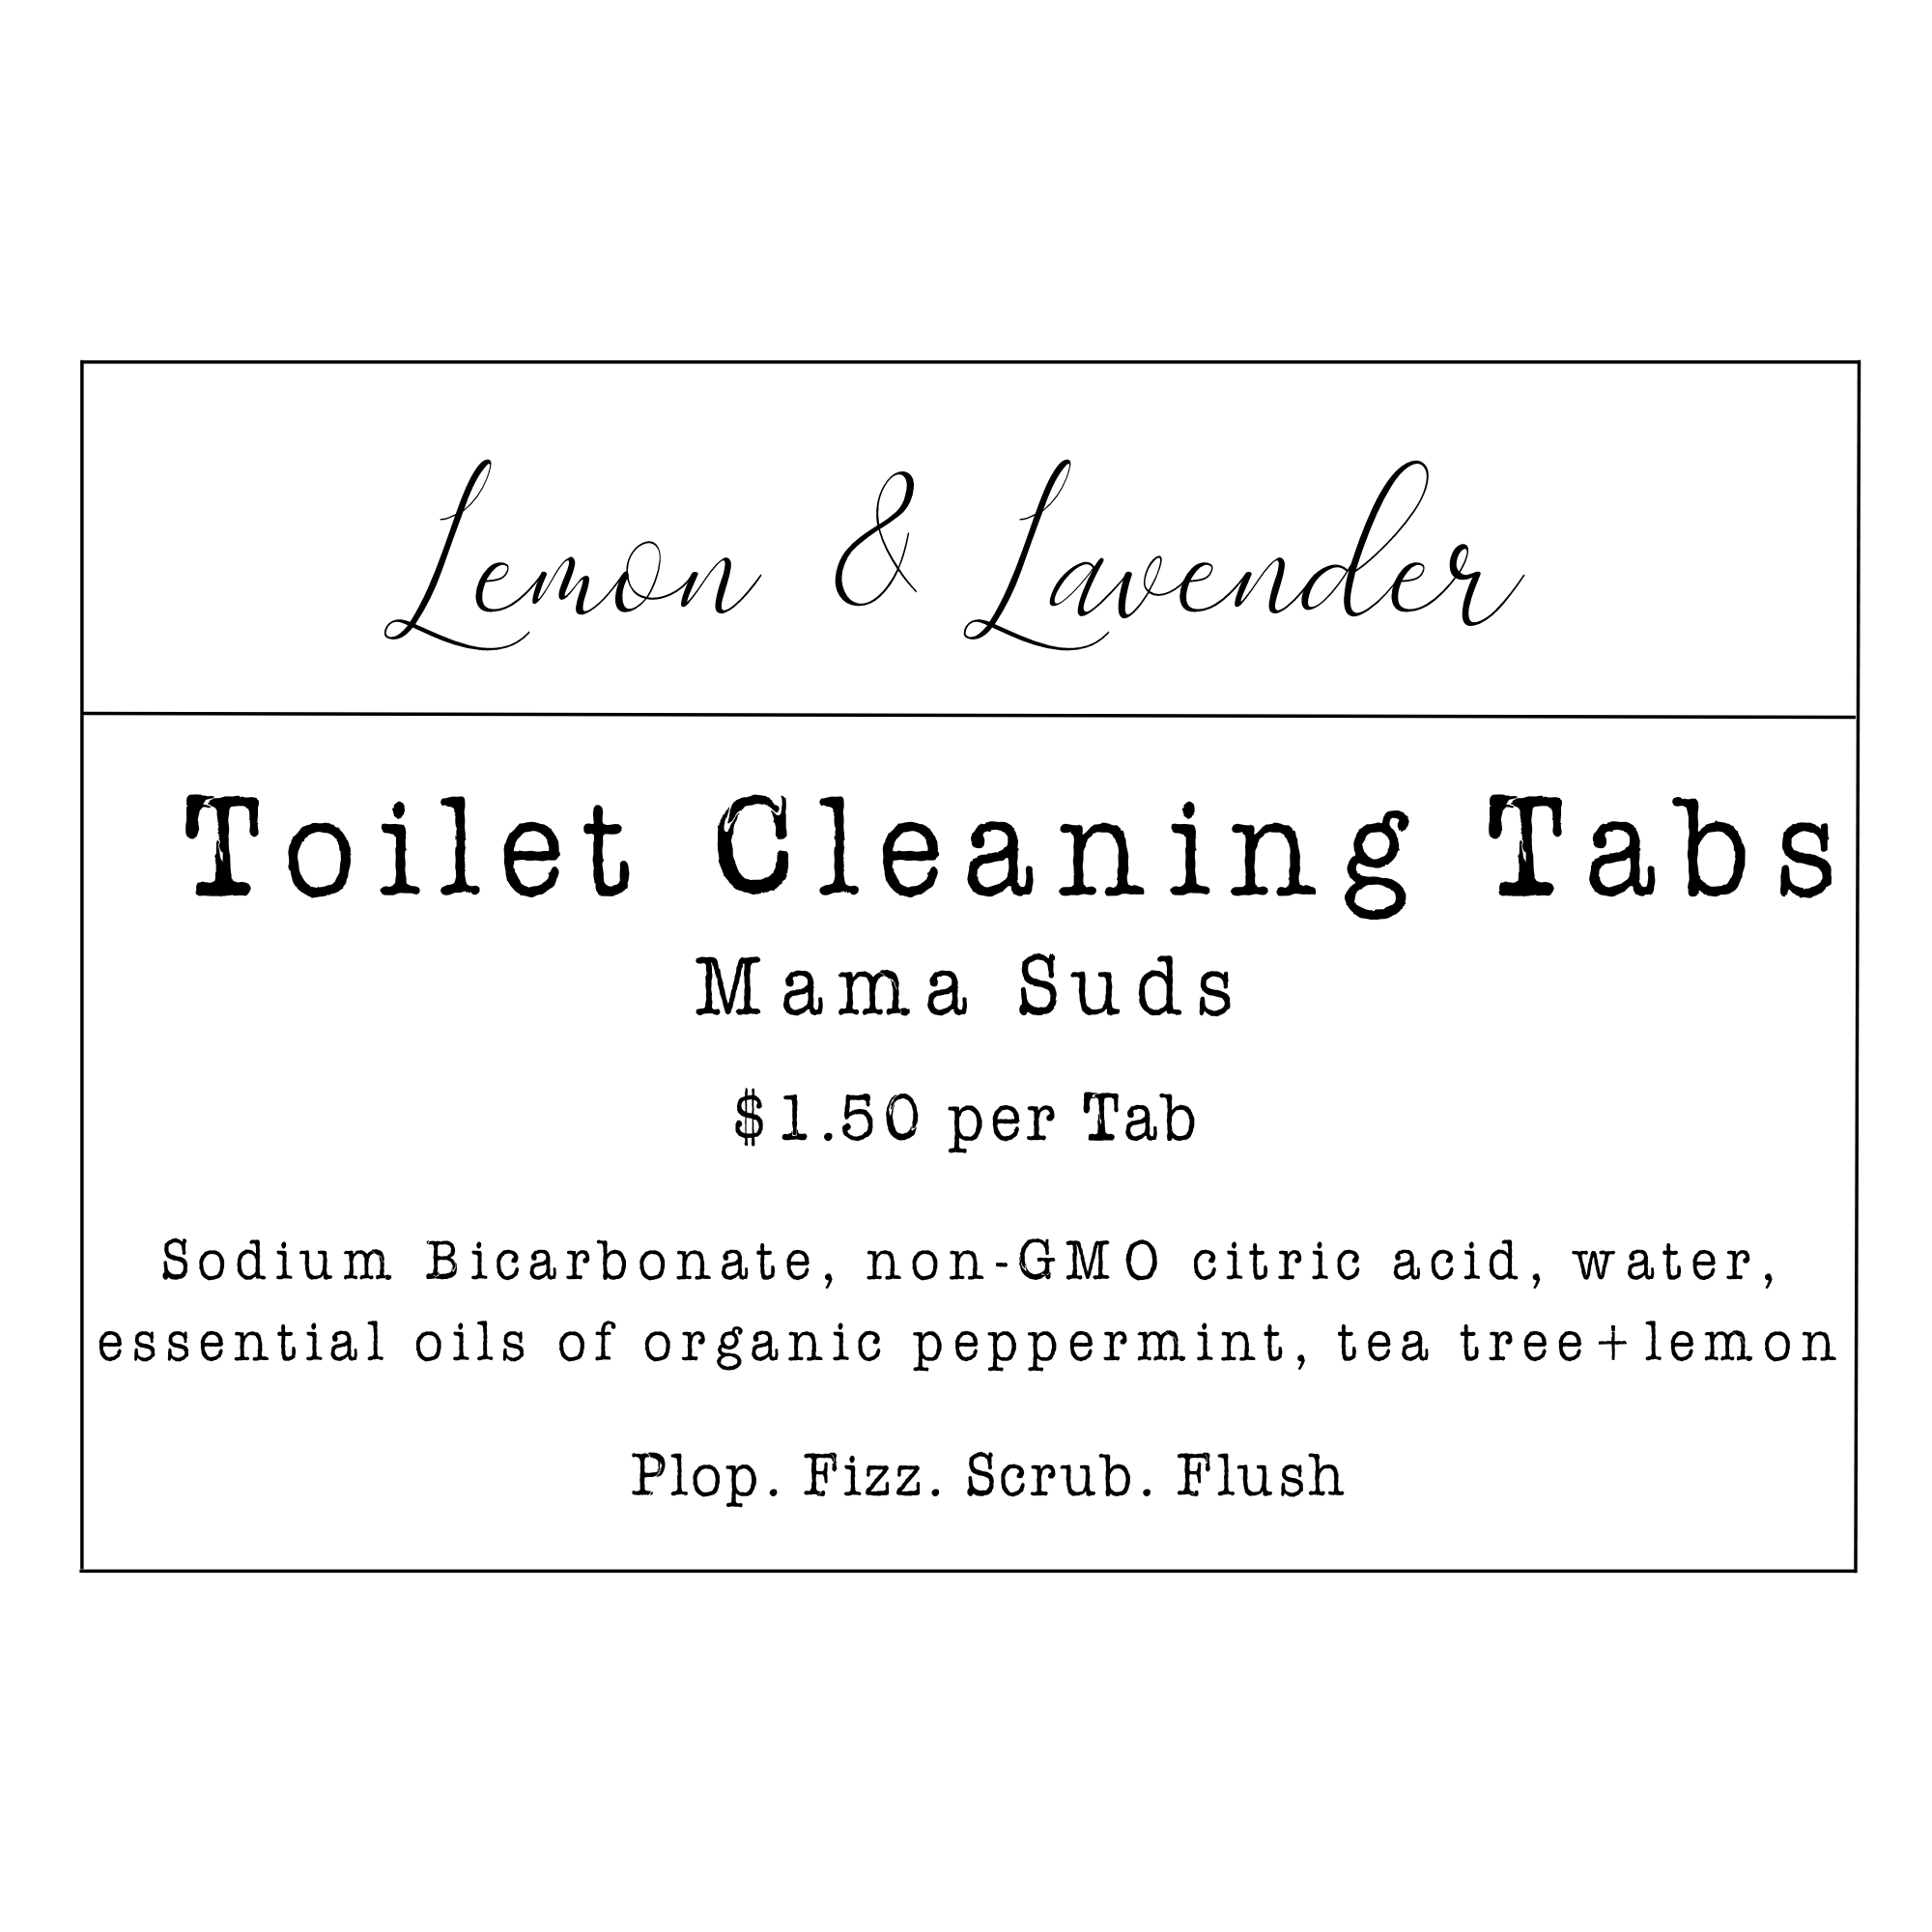 Toilet Cleaning Tabs - Lemon & Lavender